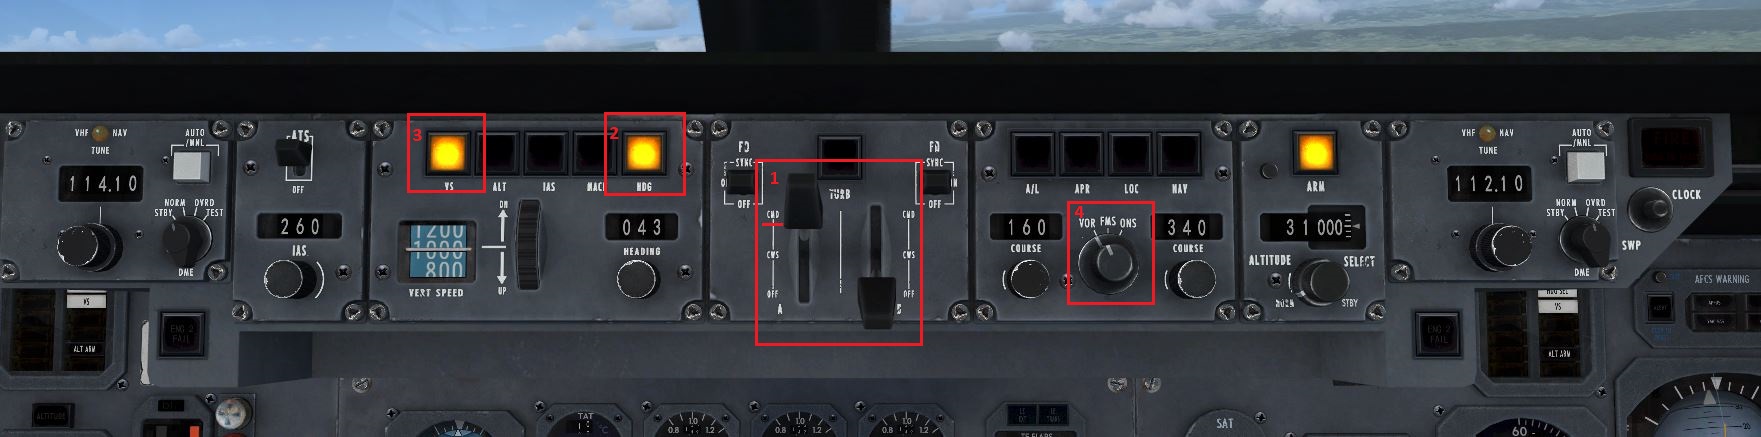 L-1011_Autopilot.JPG